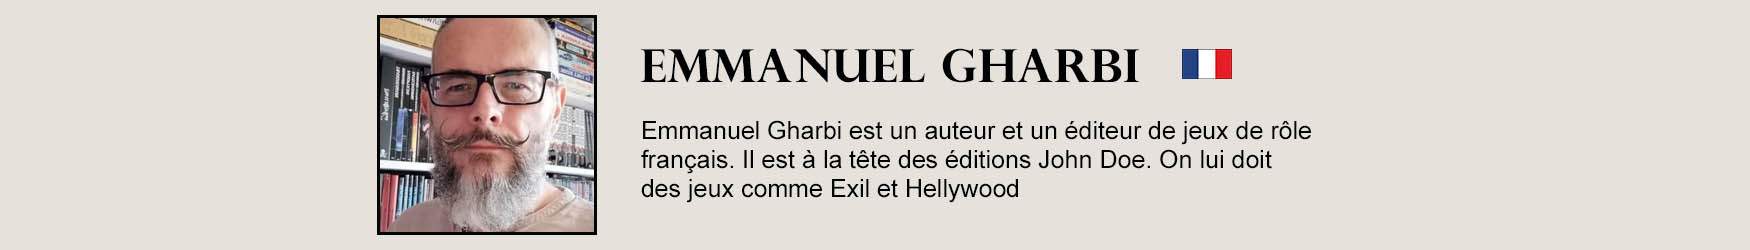 Emmanuel Gharbi tag